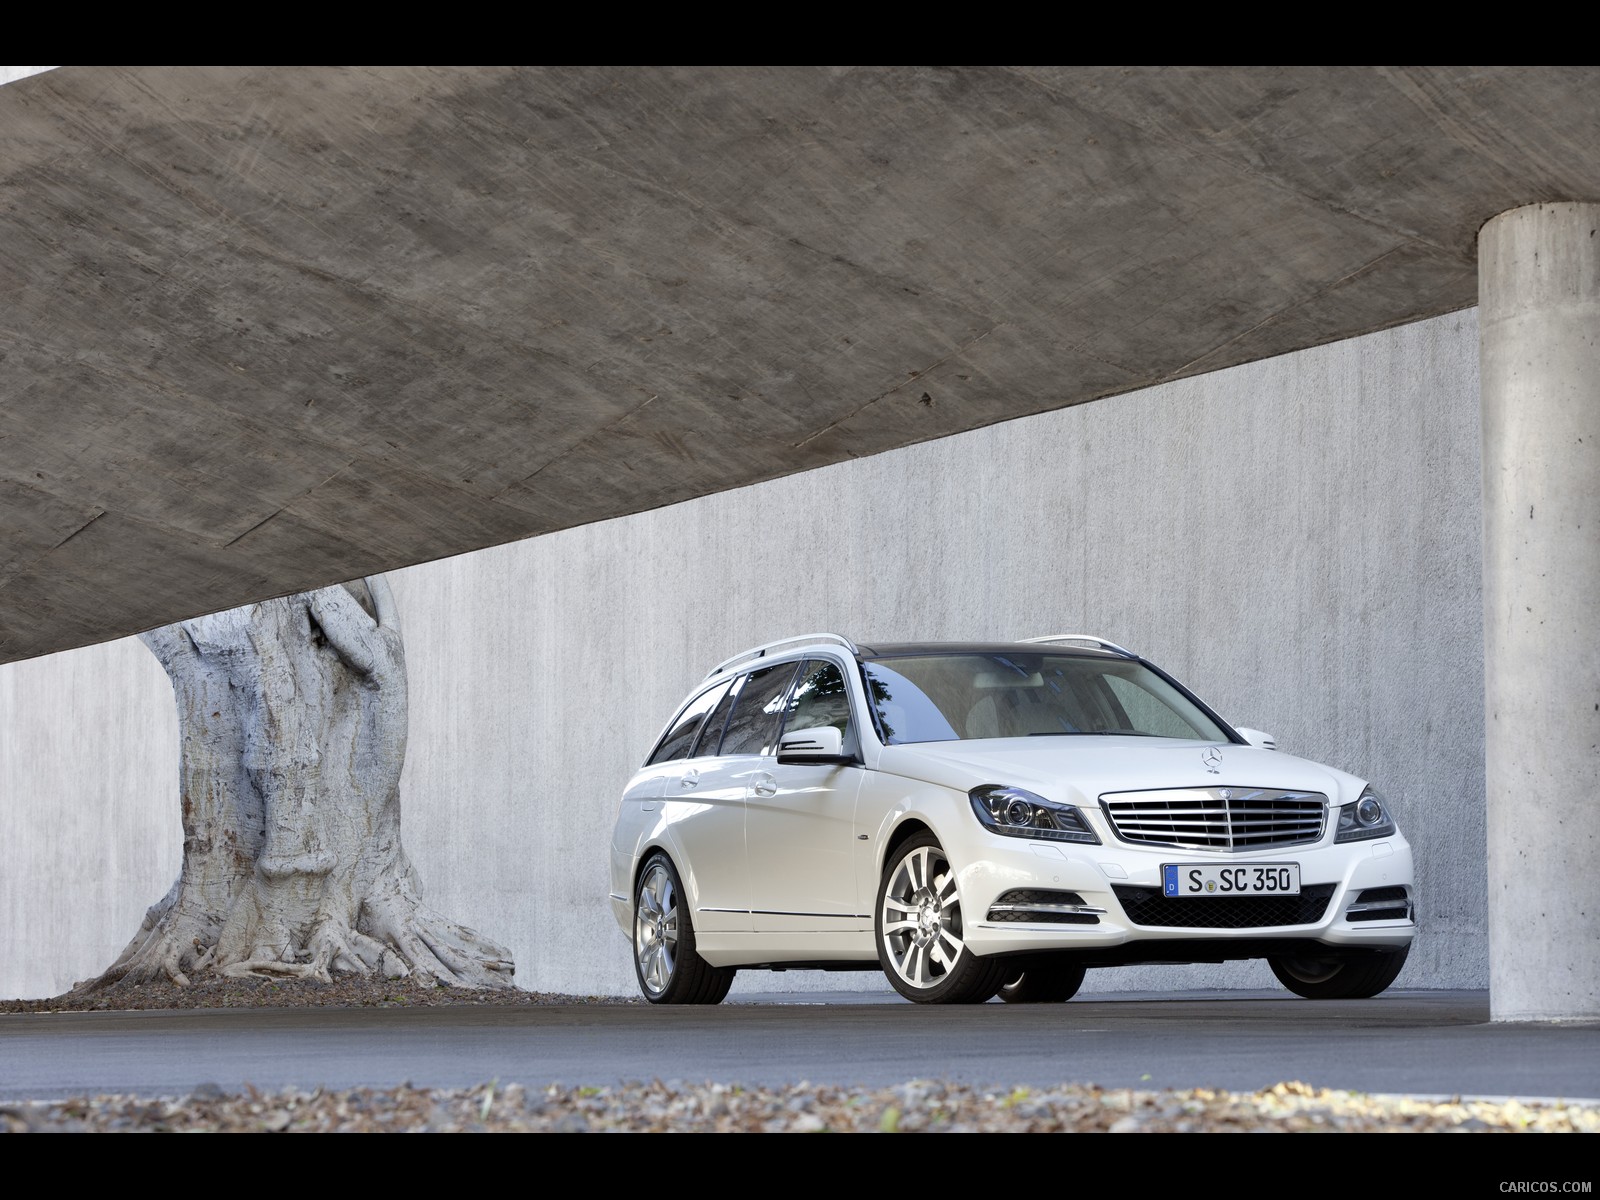 Mercedes-Benz C-Class Estate (2012)  - Rear Angle , #5 of 36